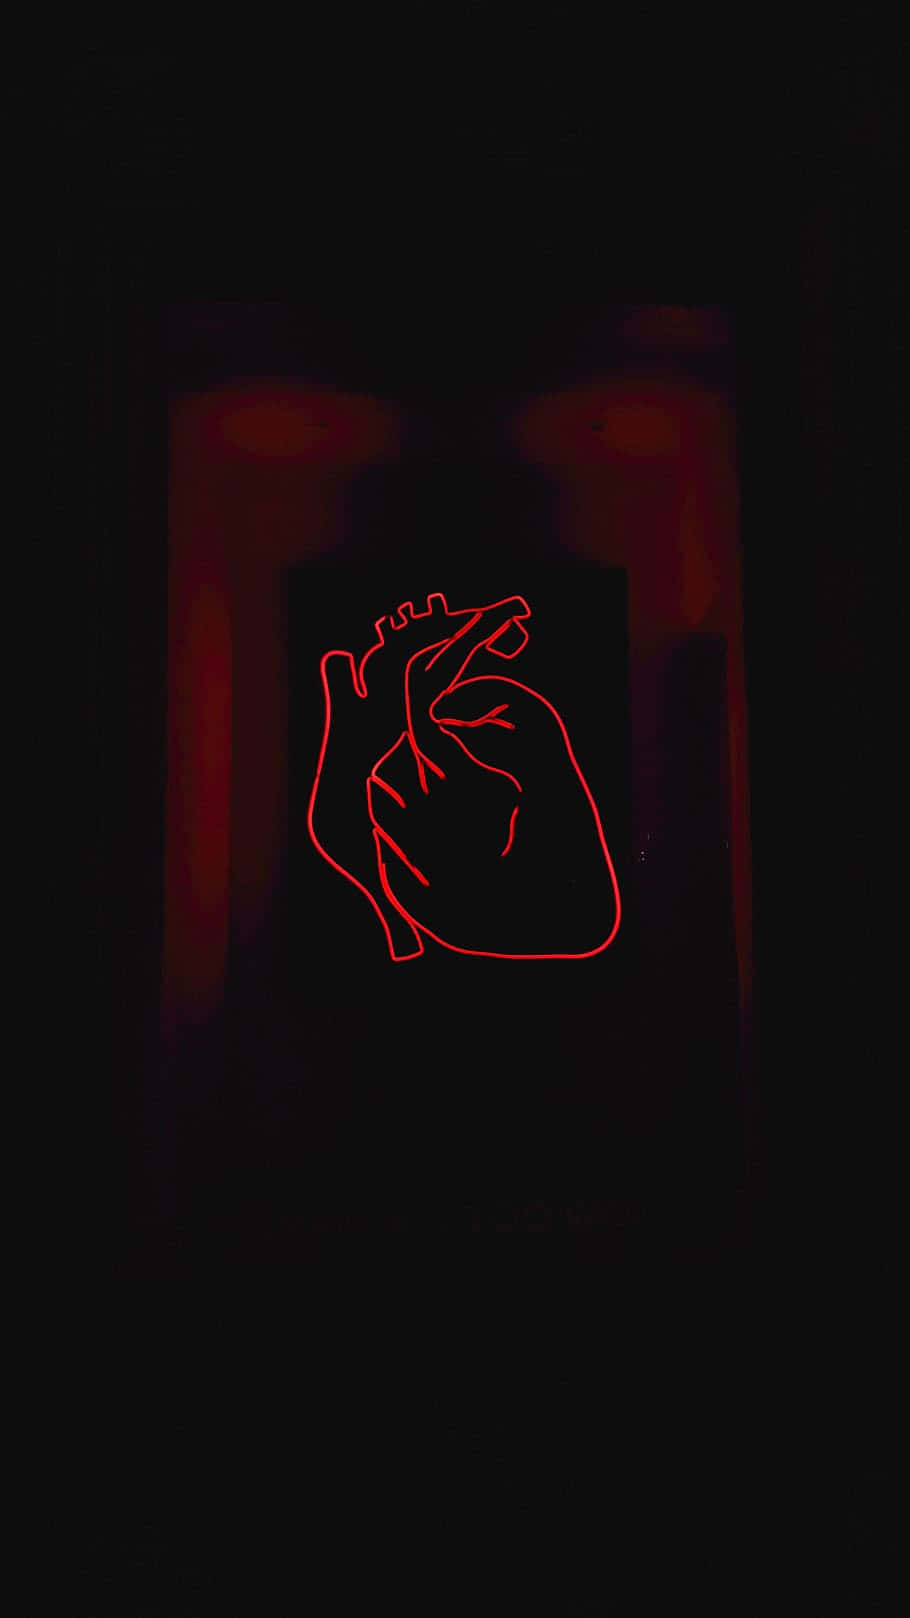 A broken heart symbol against a black background